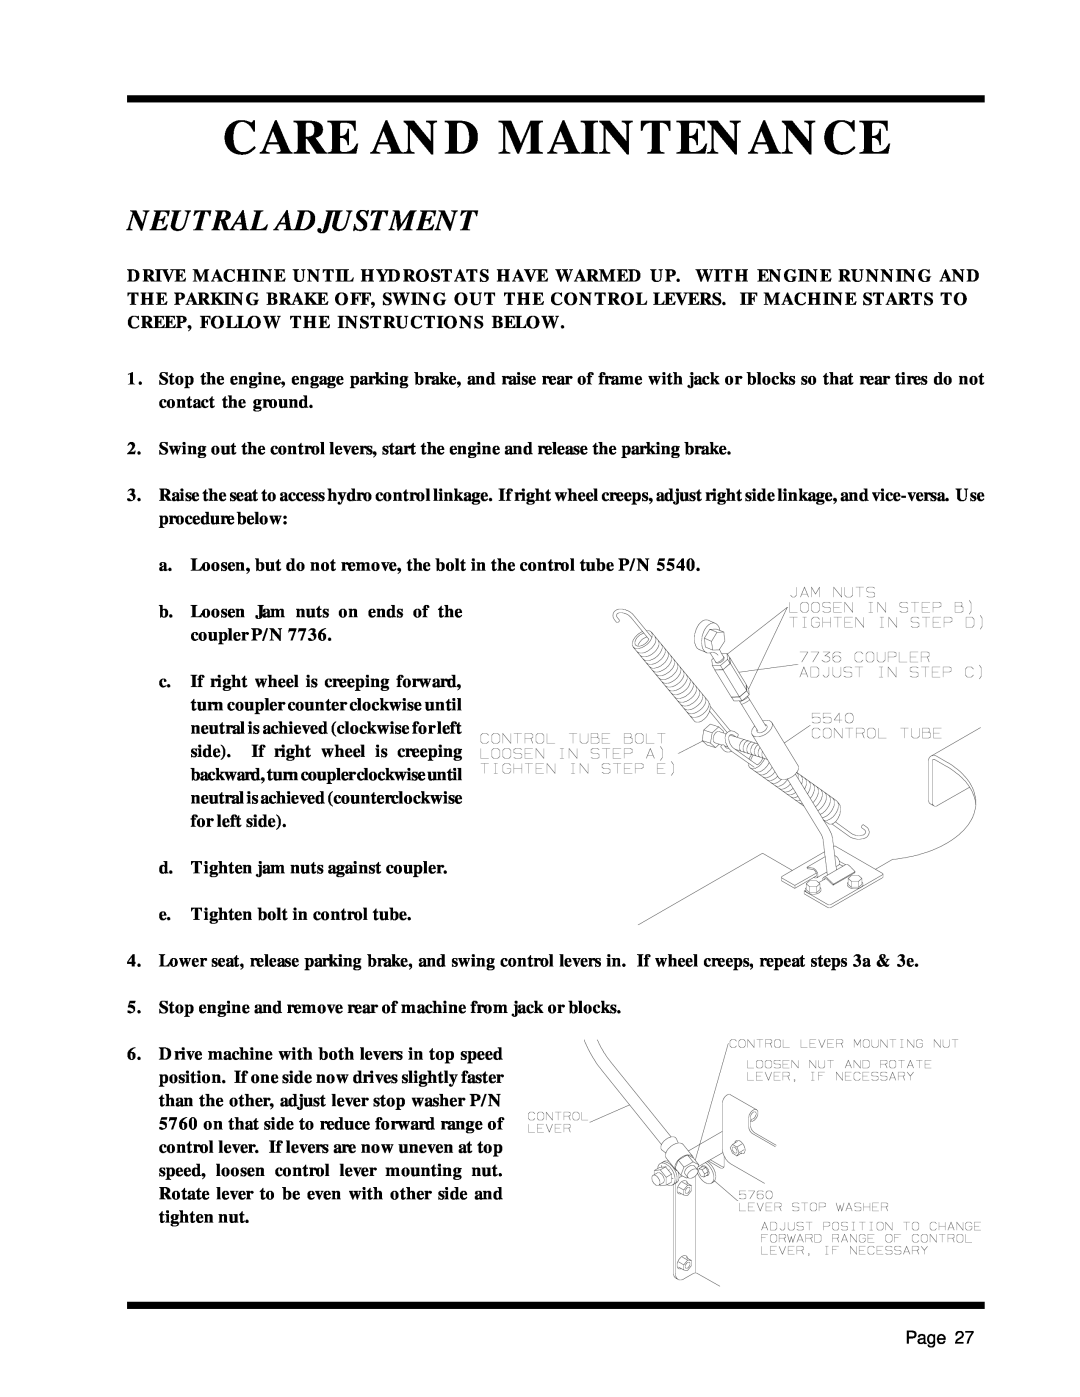 Dixon 1857-0599 manual Neutral Adjustment, Care And Maintenance 